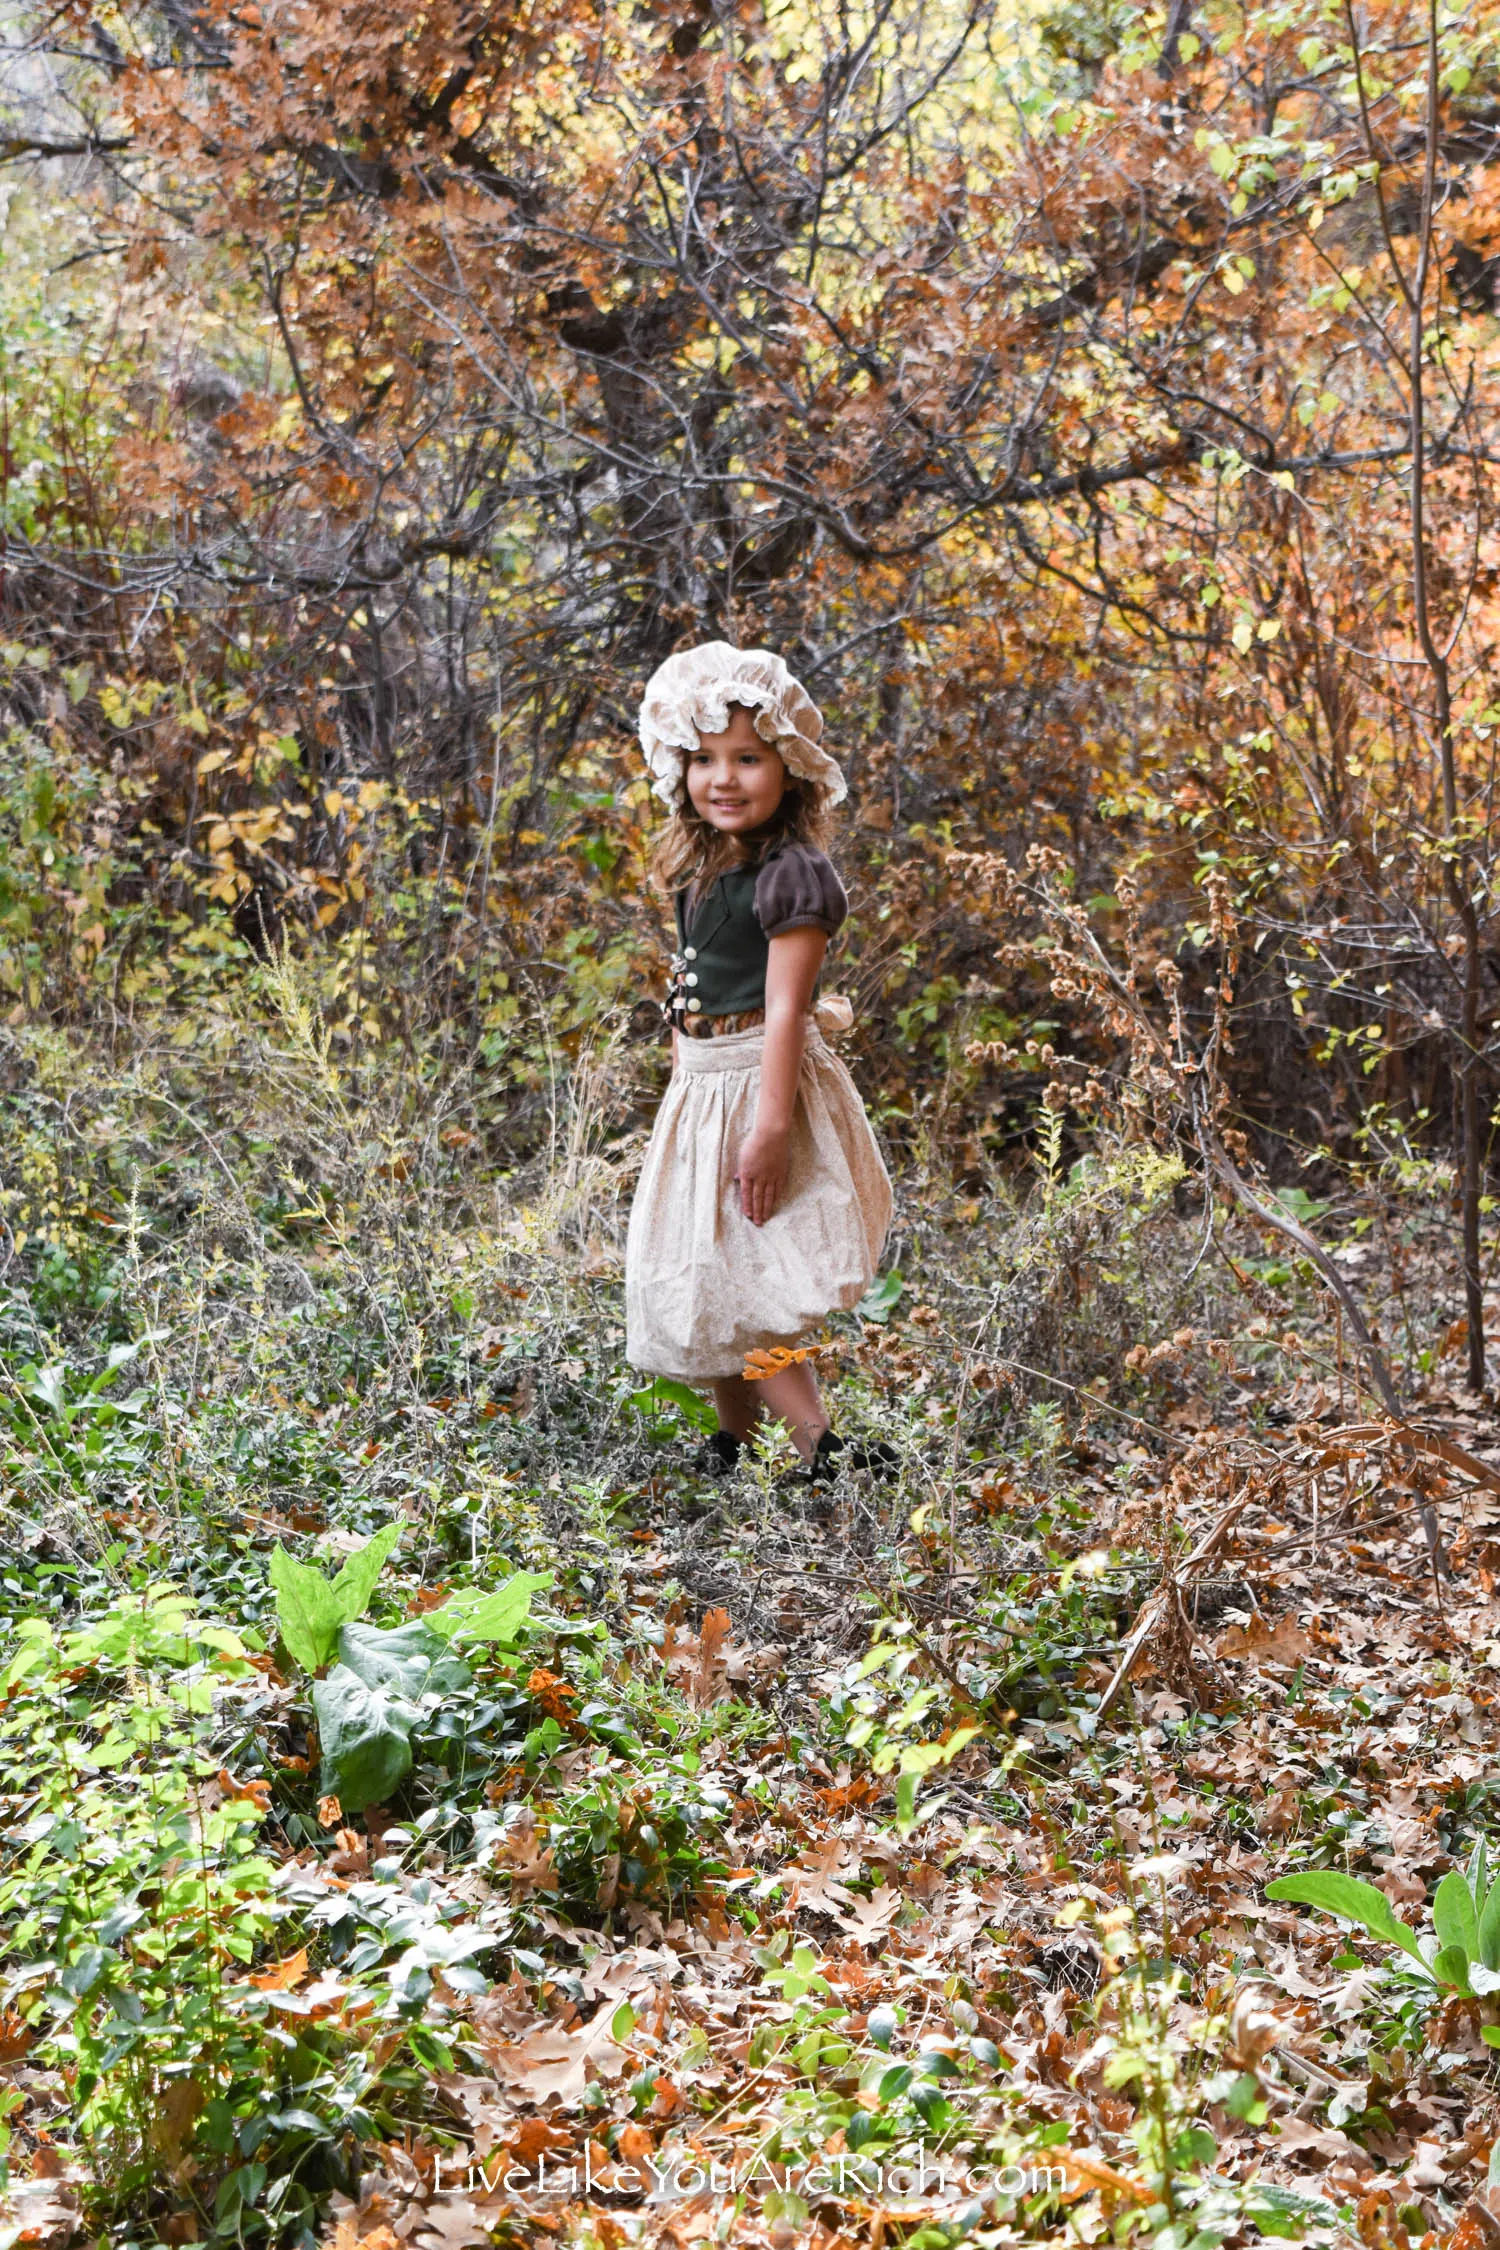 Gretel in forest